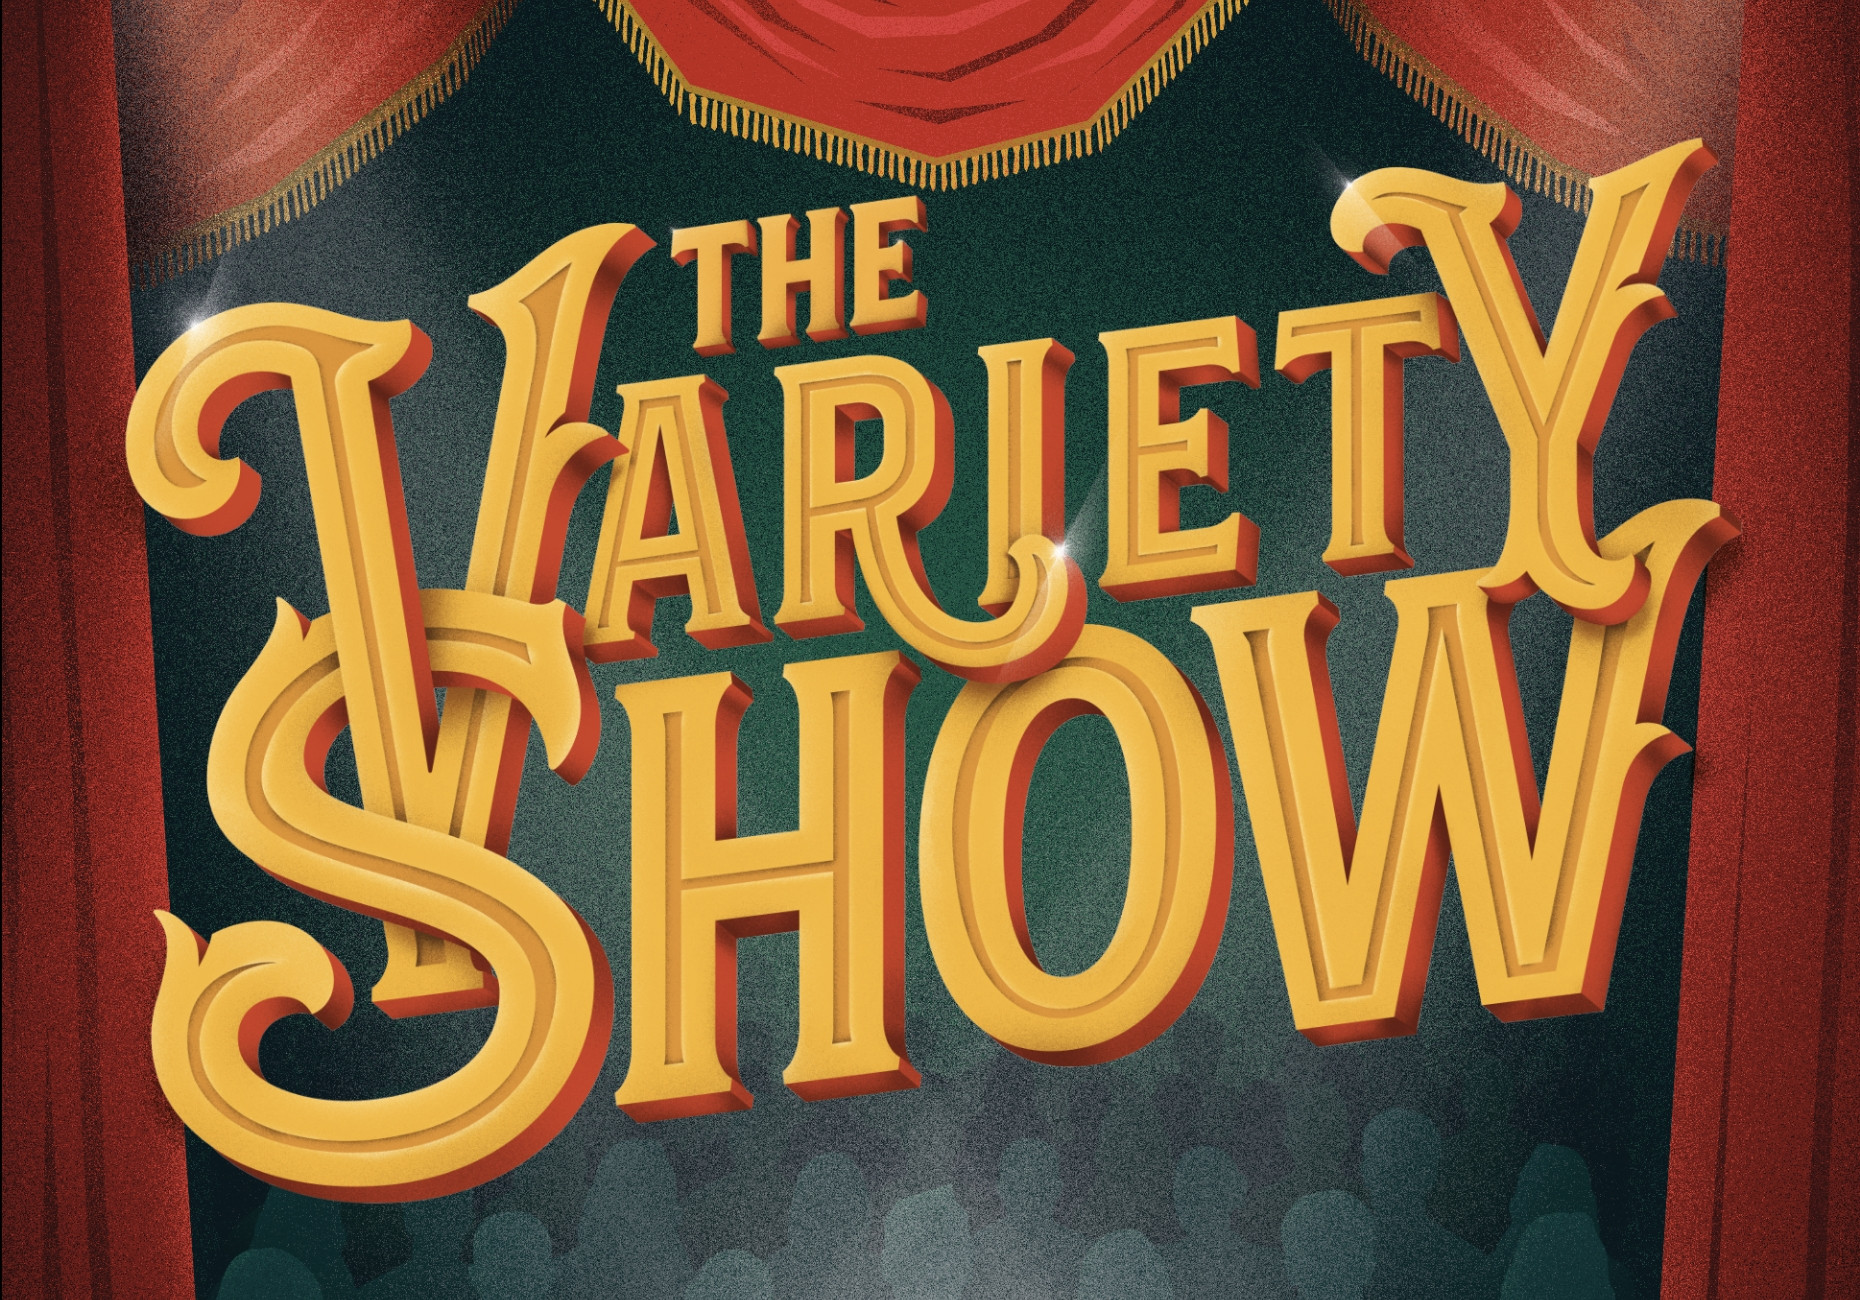 New Theatre Royal Variety Show logo design